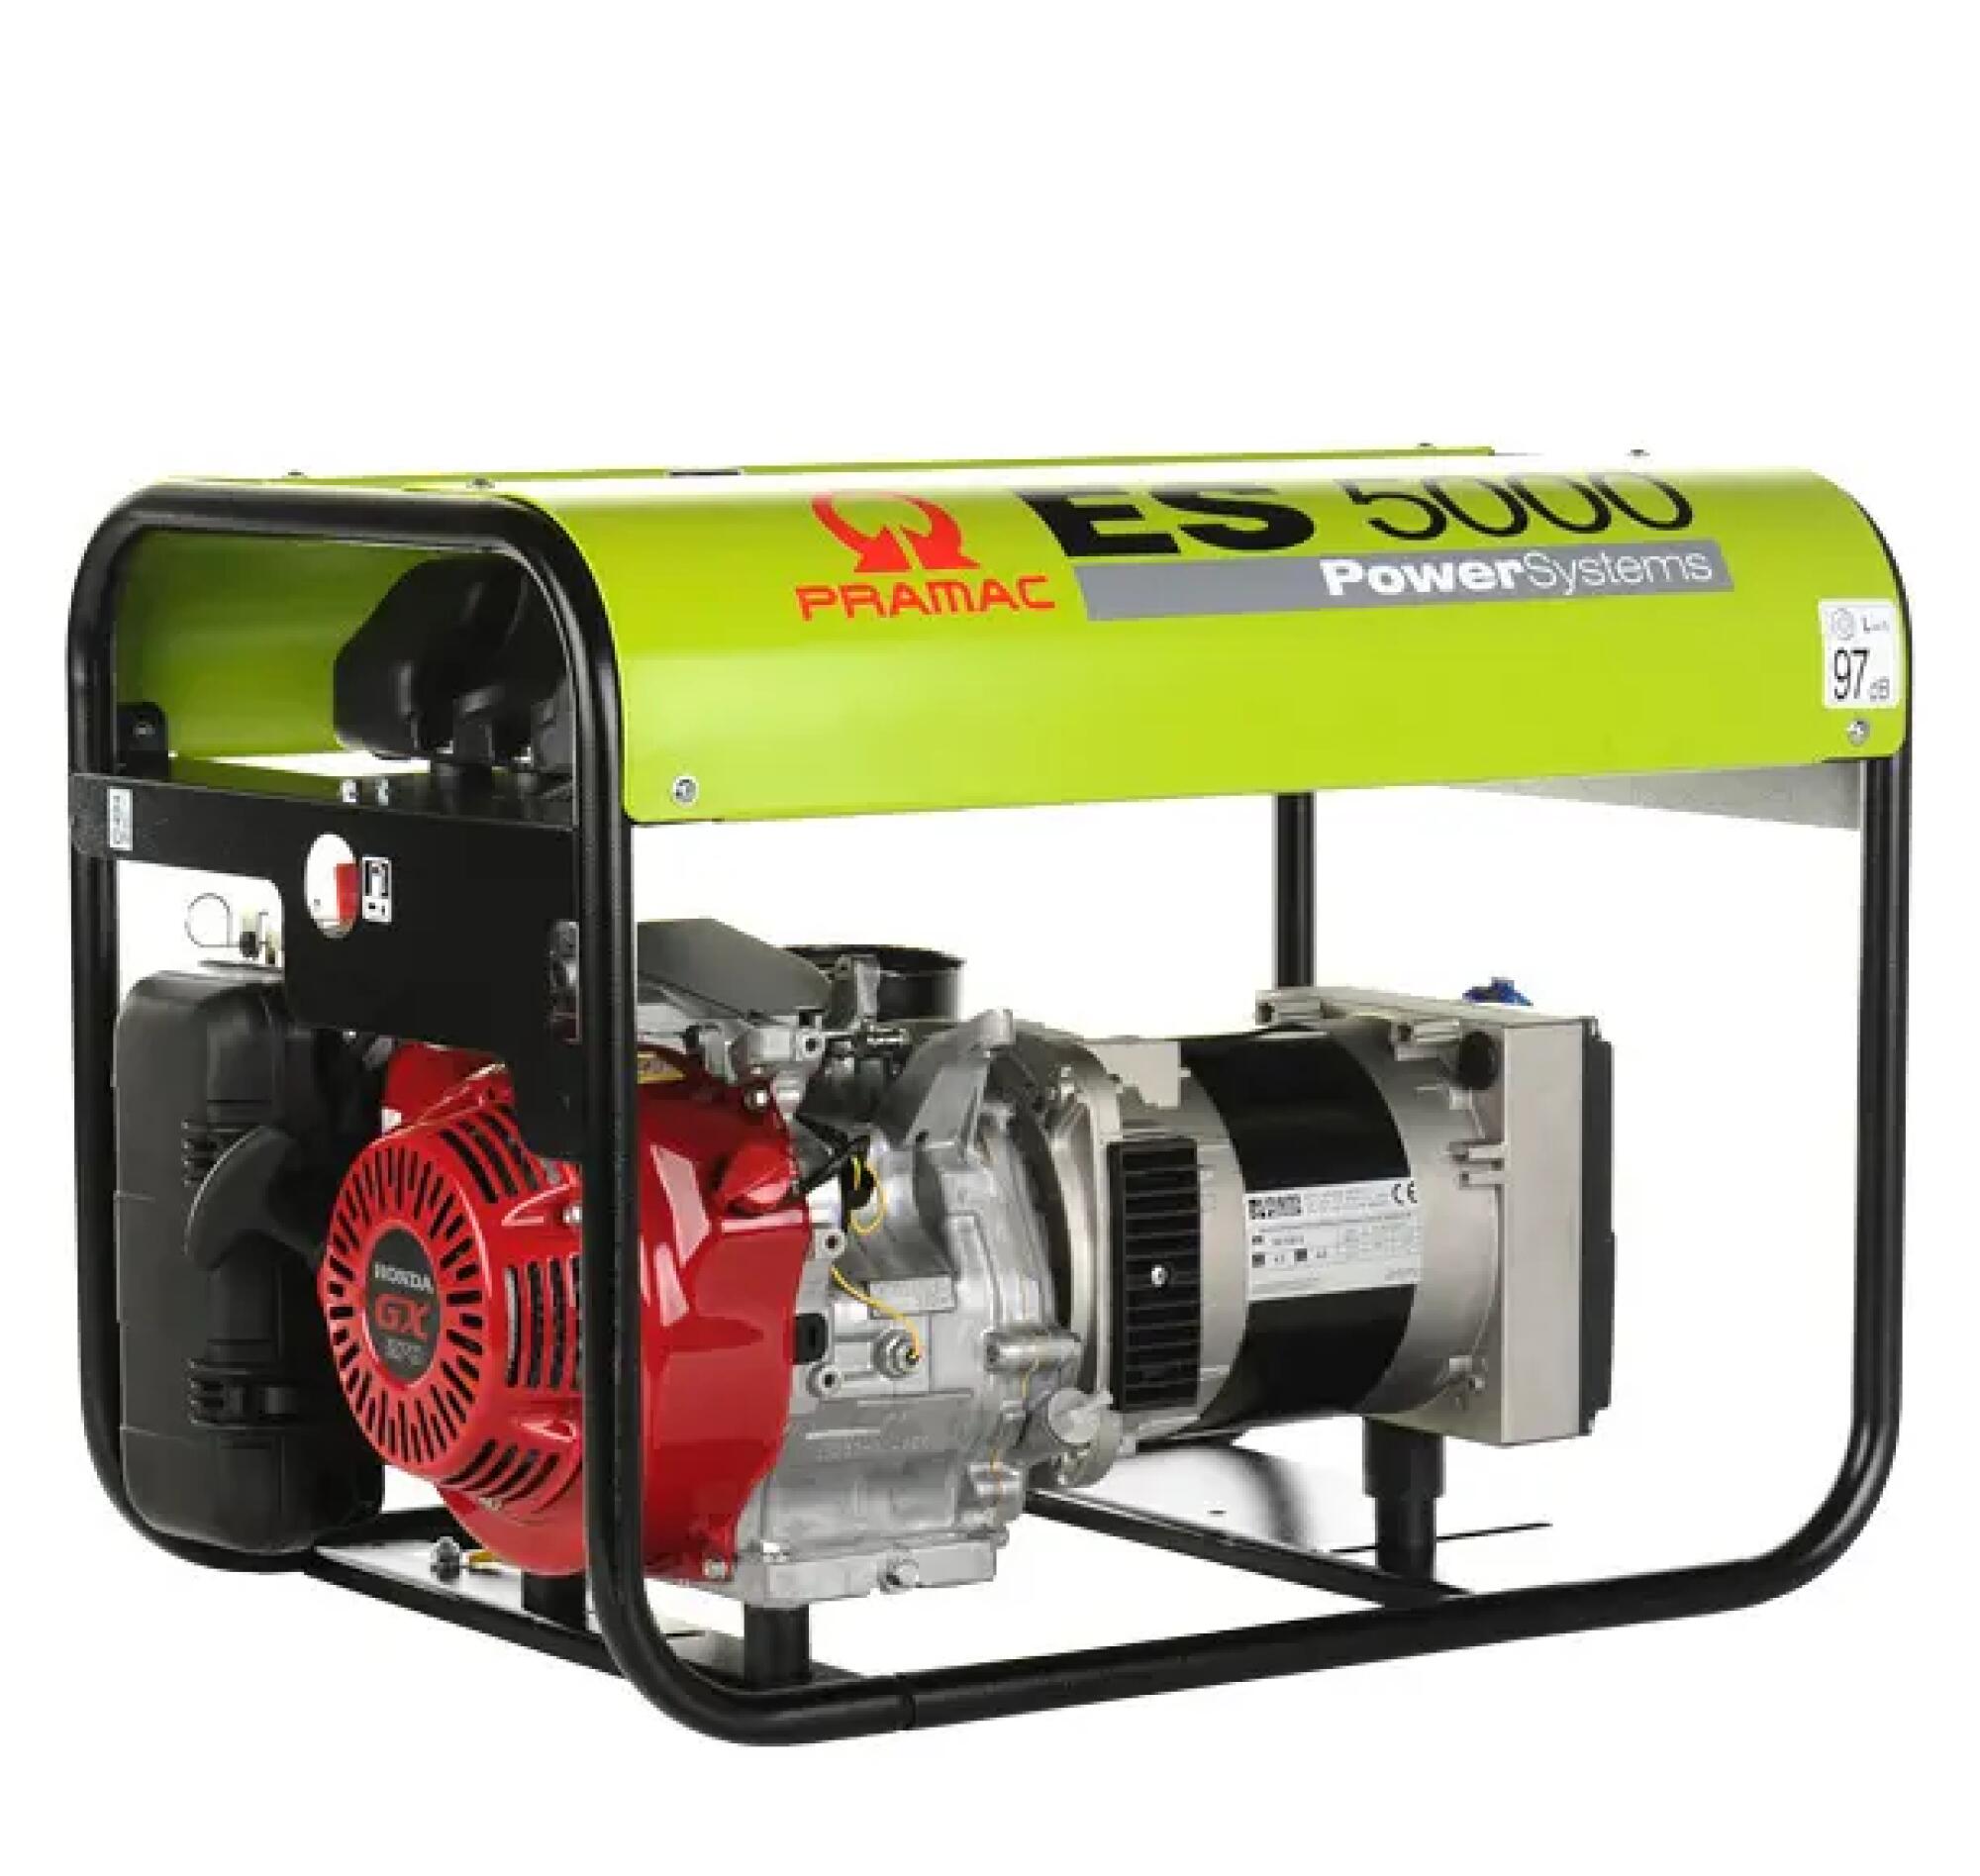 Generador pramac e3200 gasolina sin plomo de 3900 w, motor honda